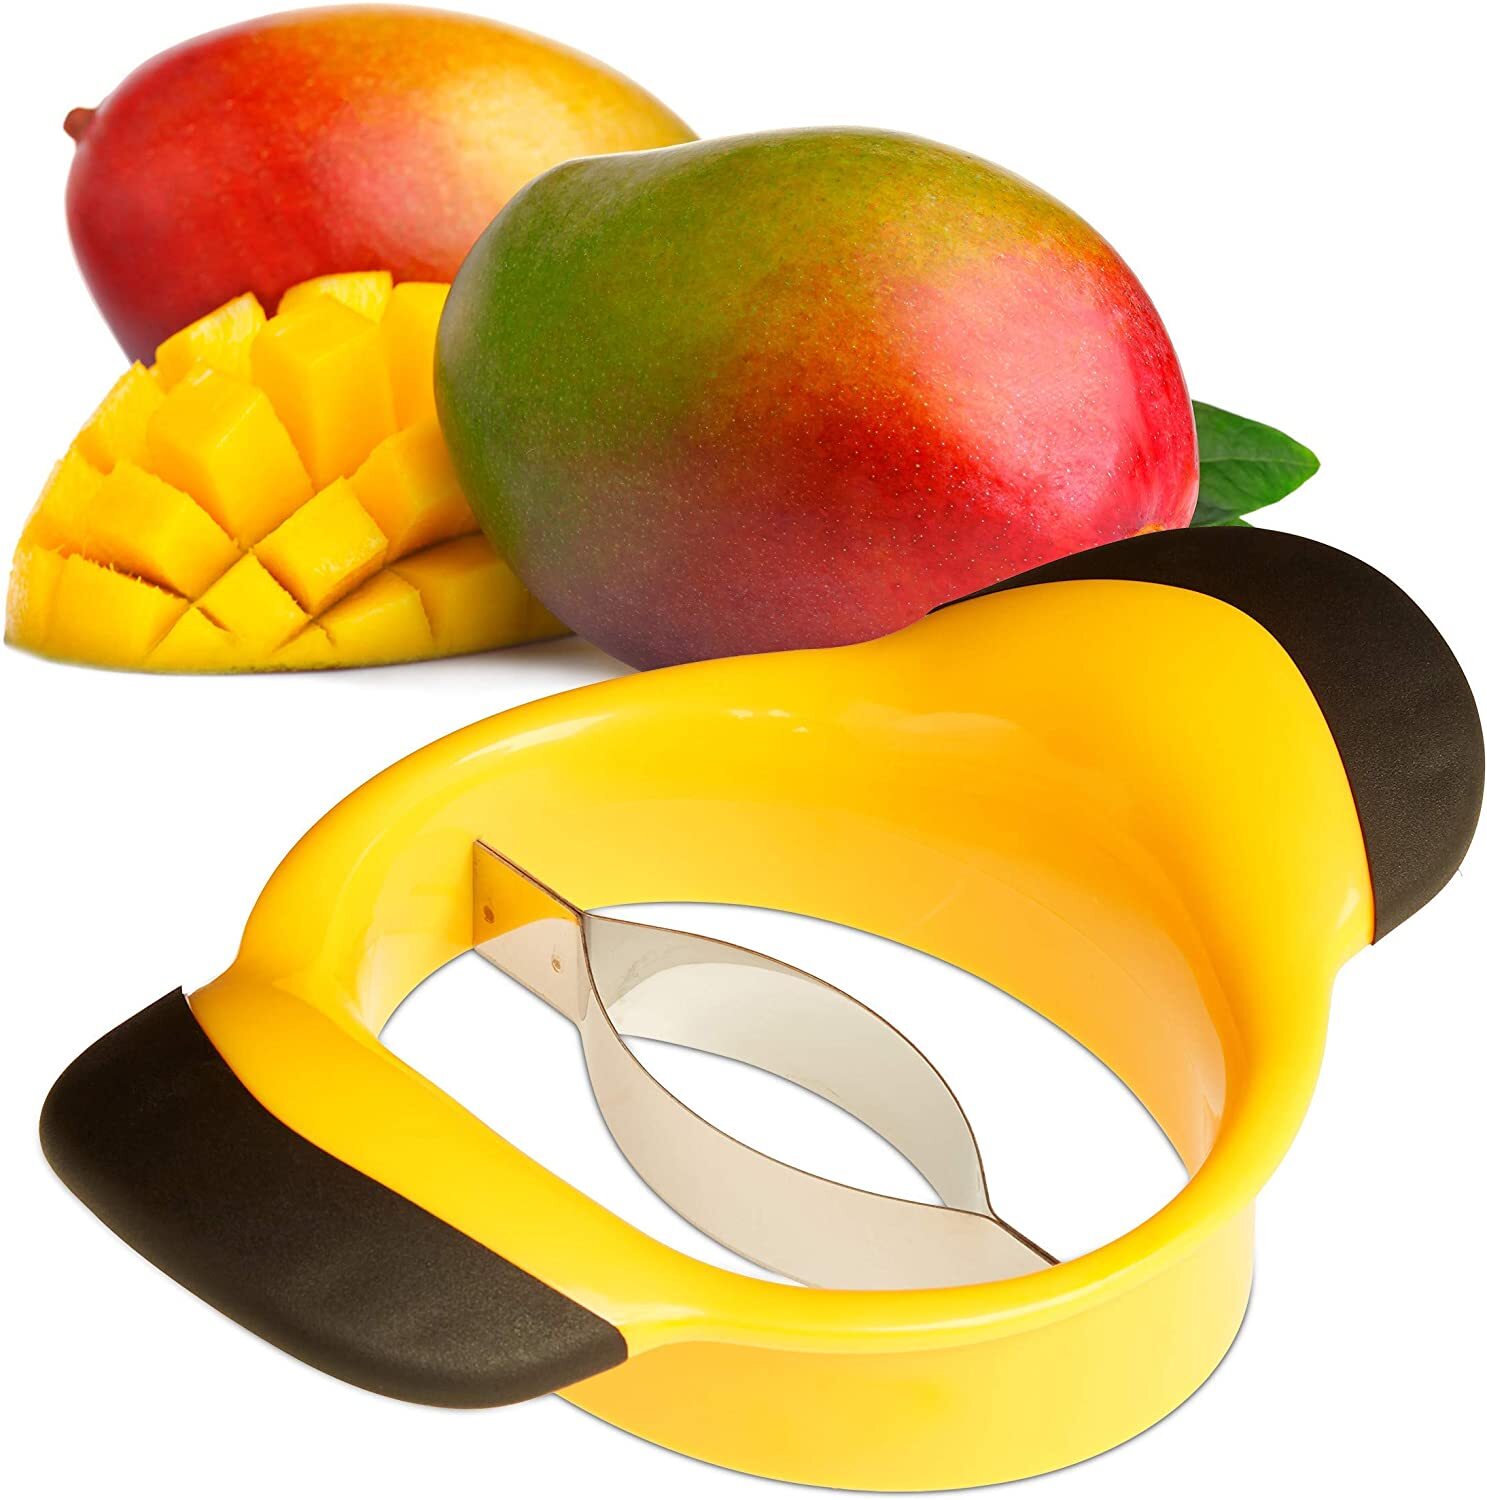 Easy Slicer Mango Cutter Corer Peeler Kitchen Gadget Tool